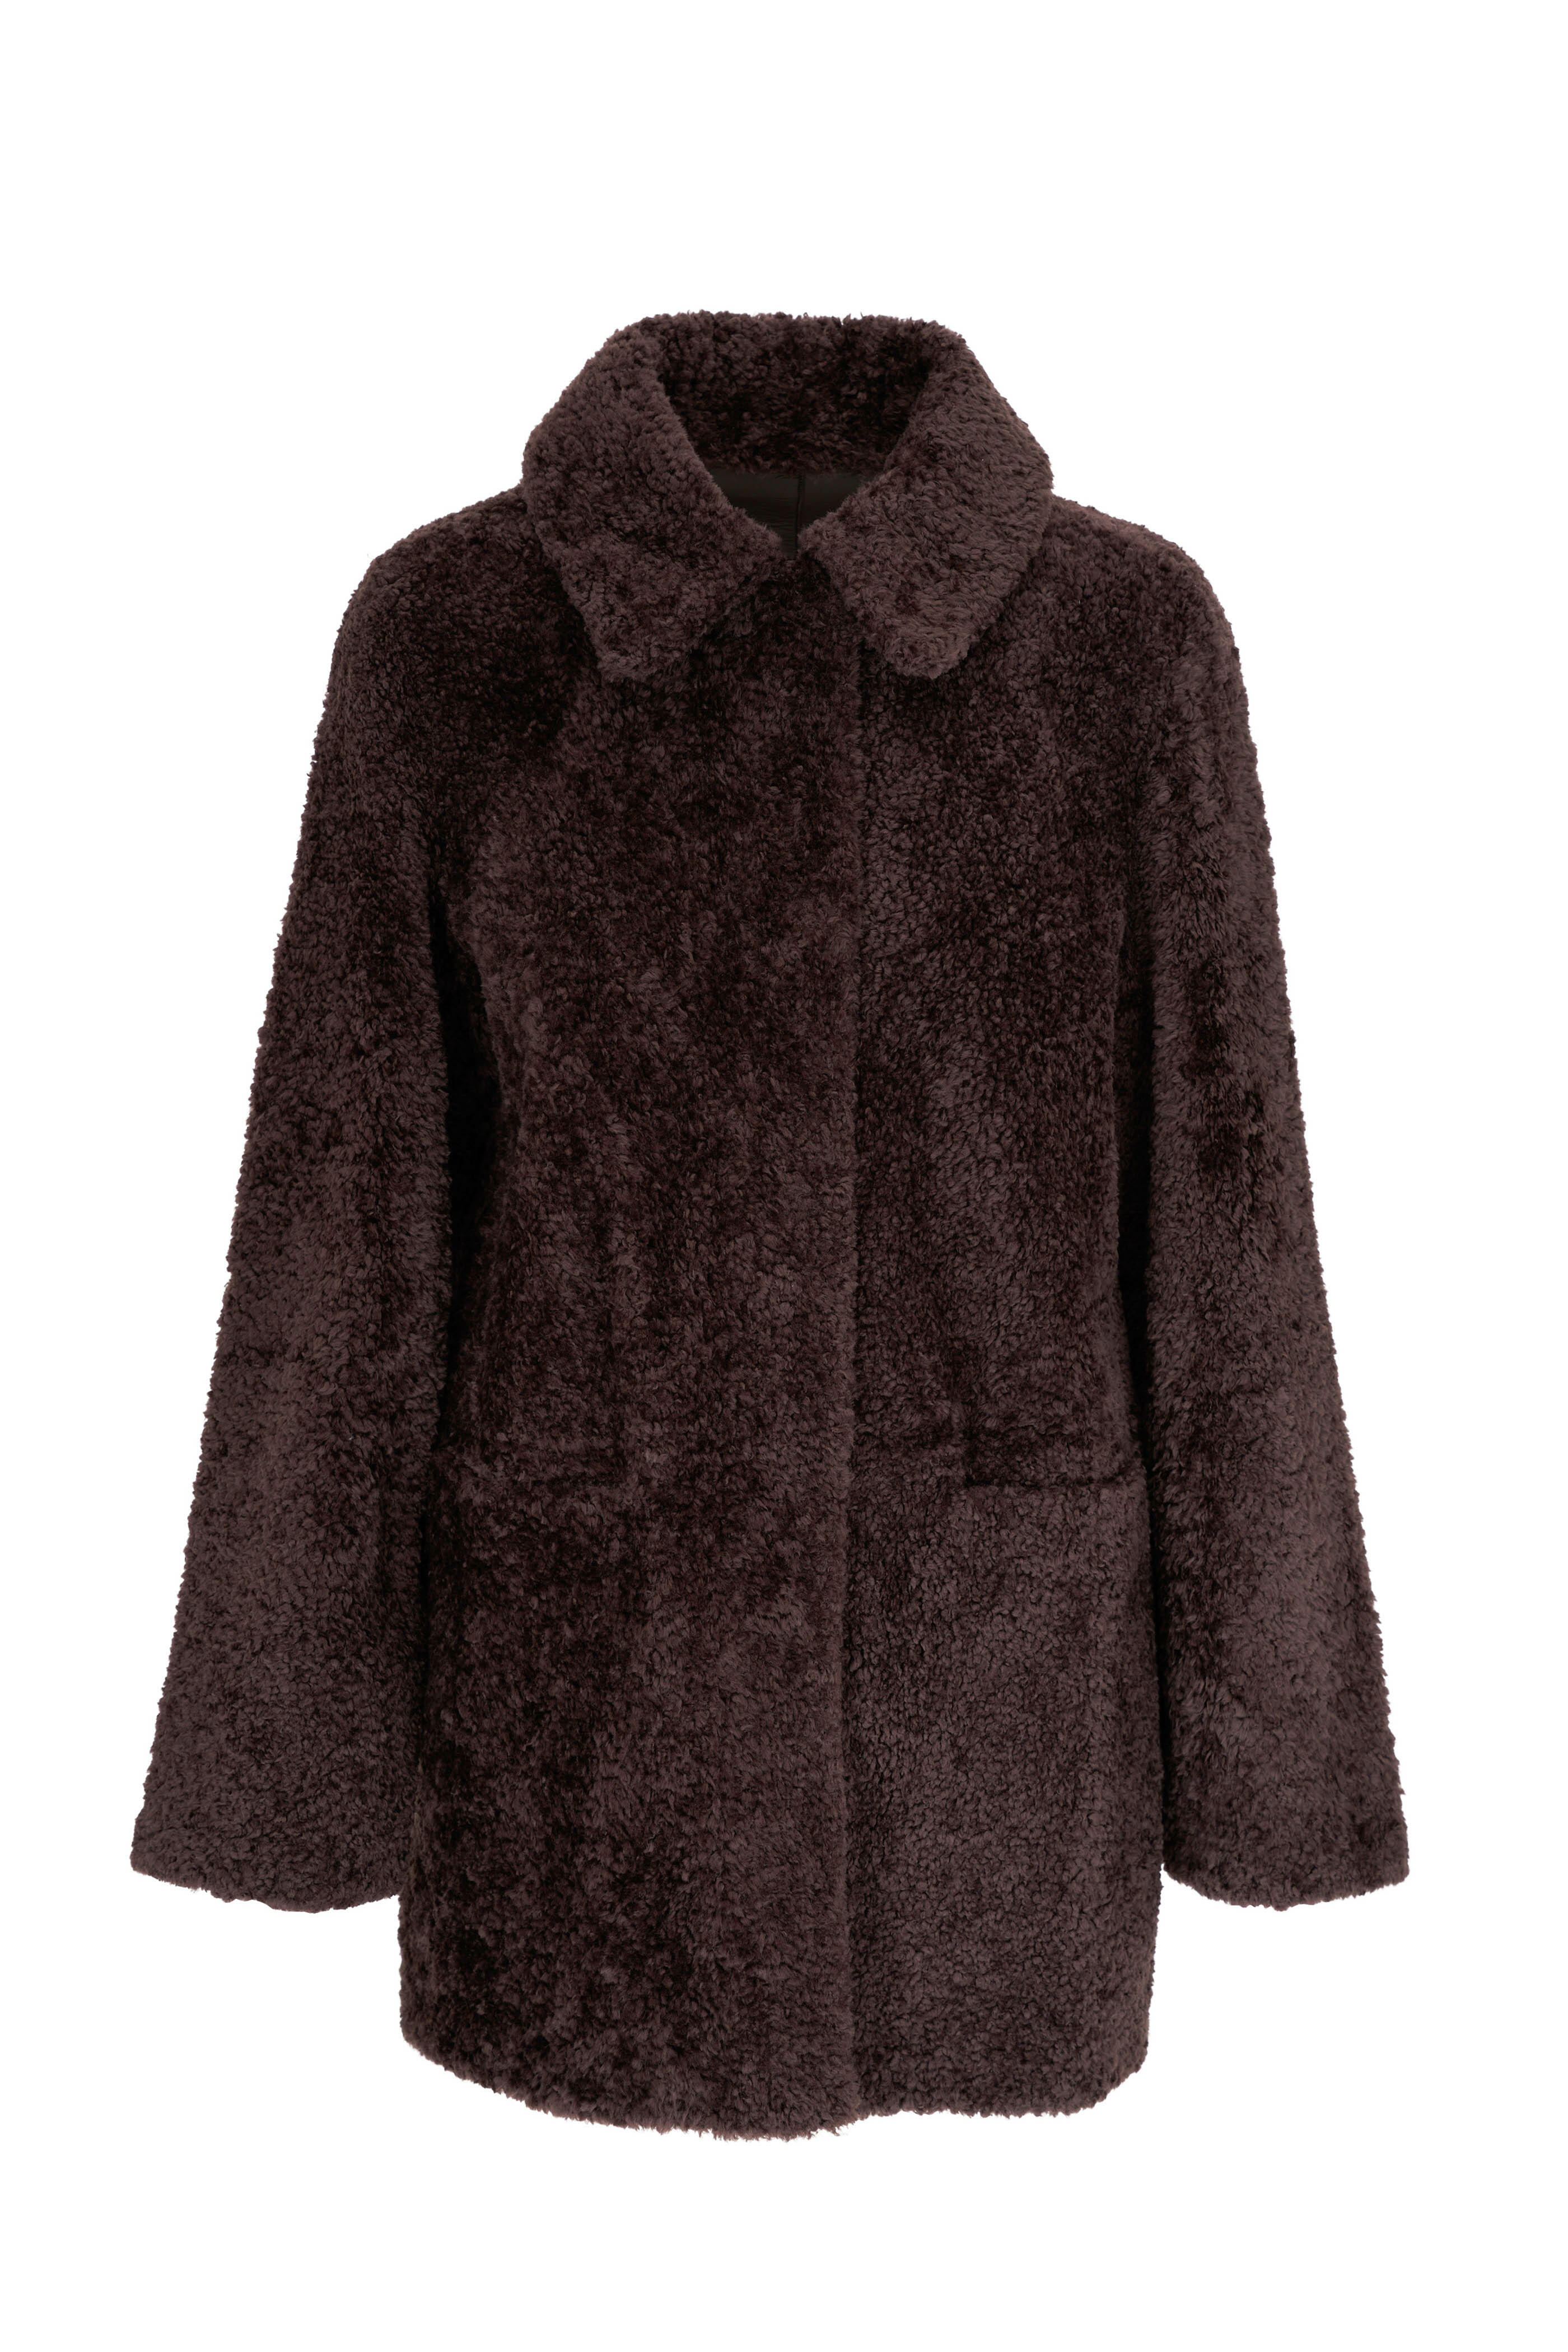 Pologeorgis - Mocha Curly Shearling & Leather Reversible Coat